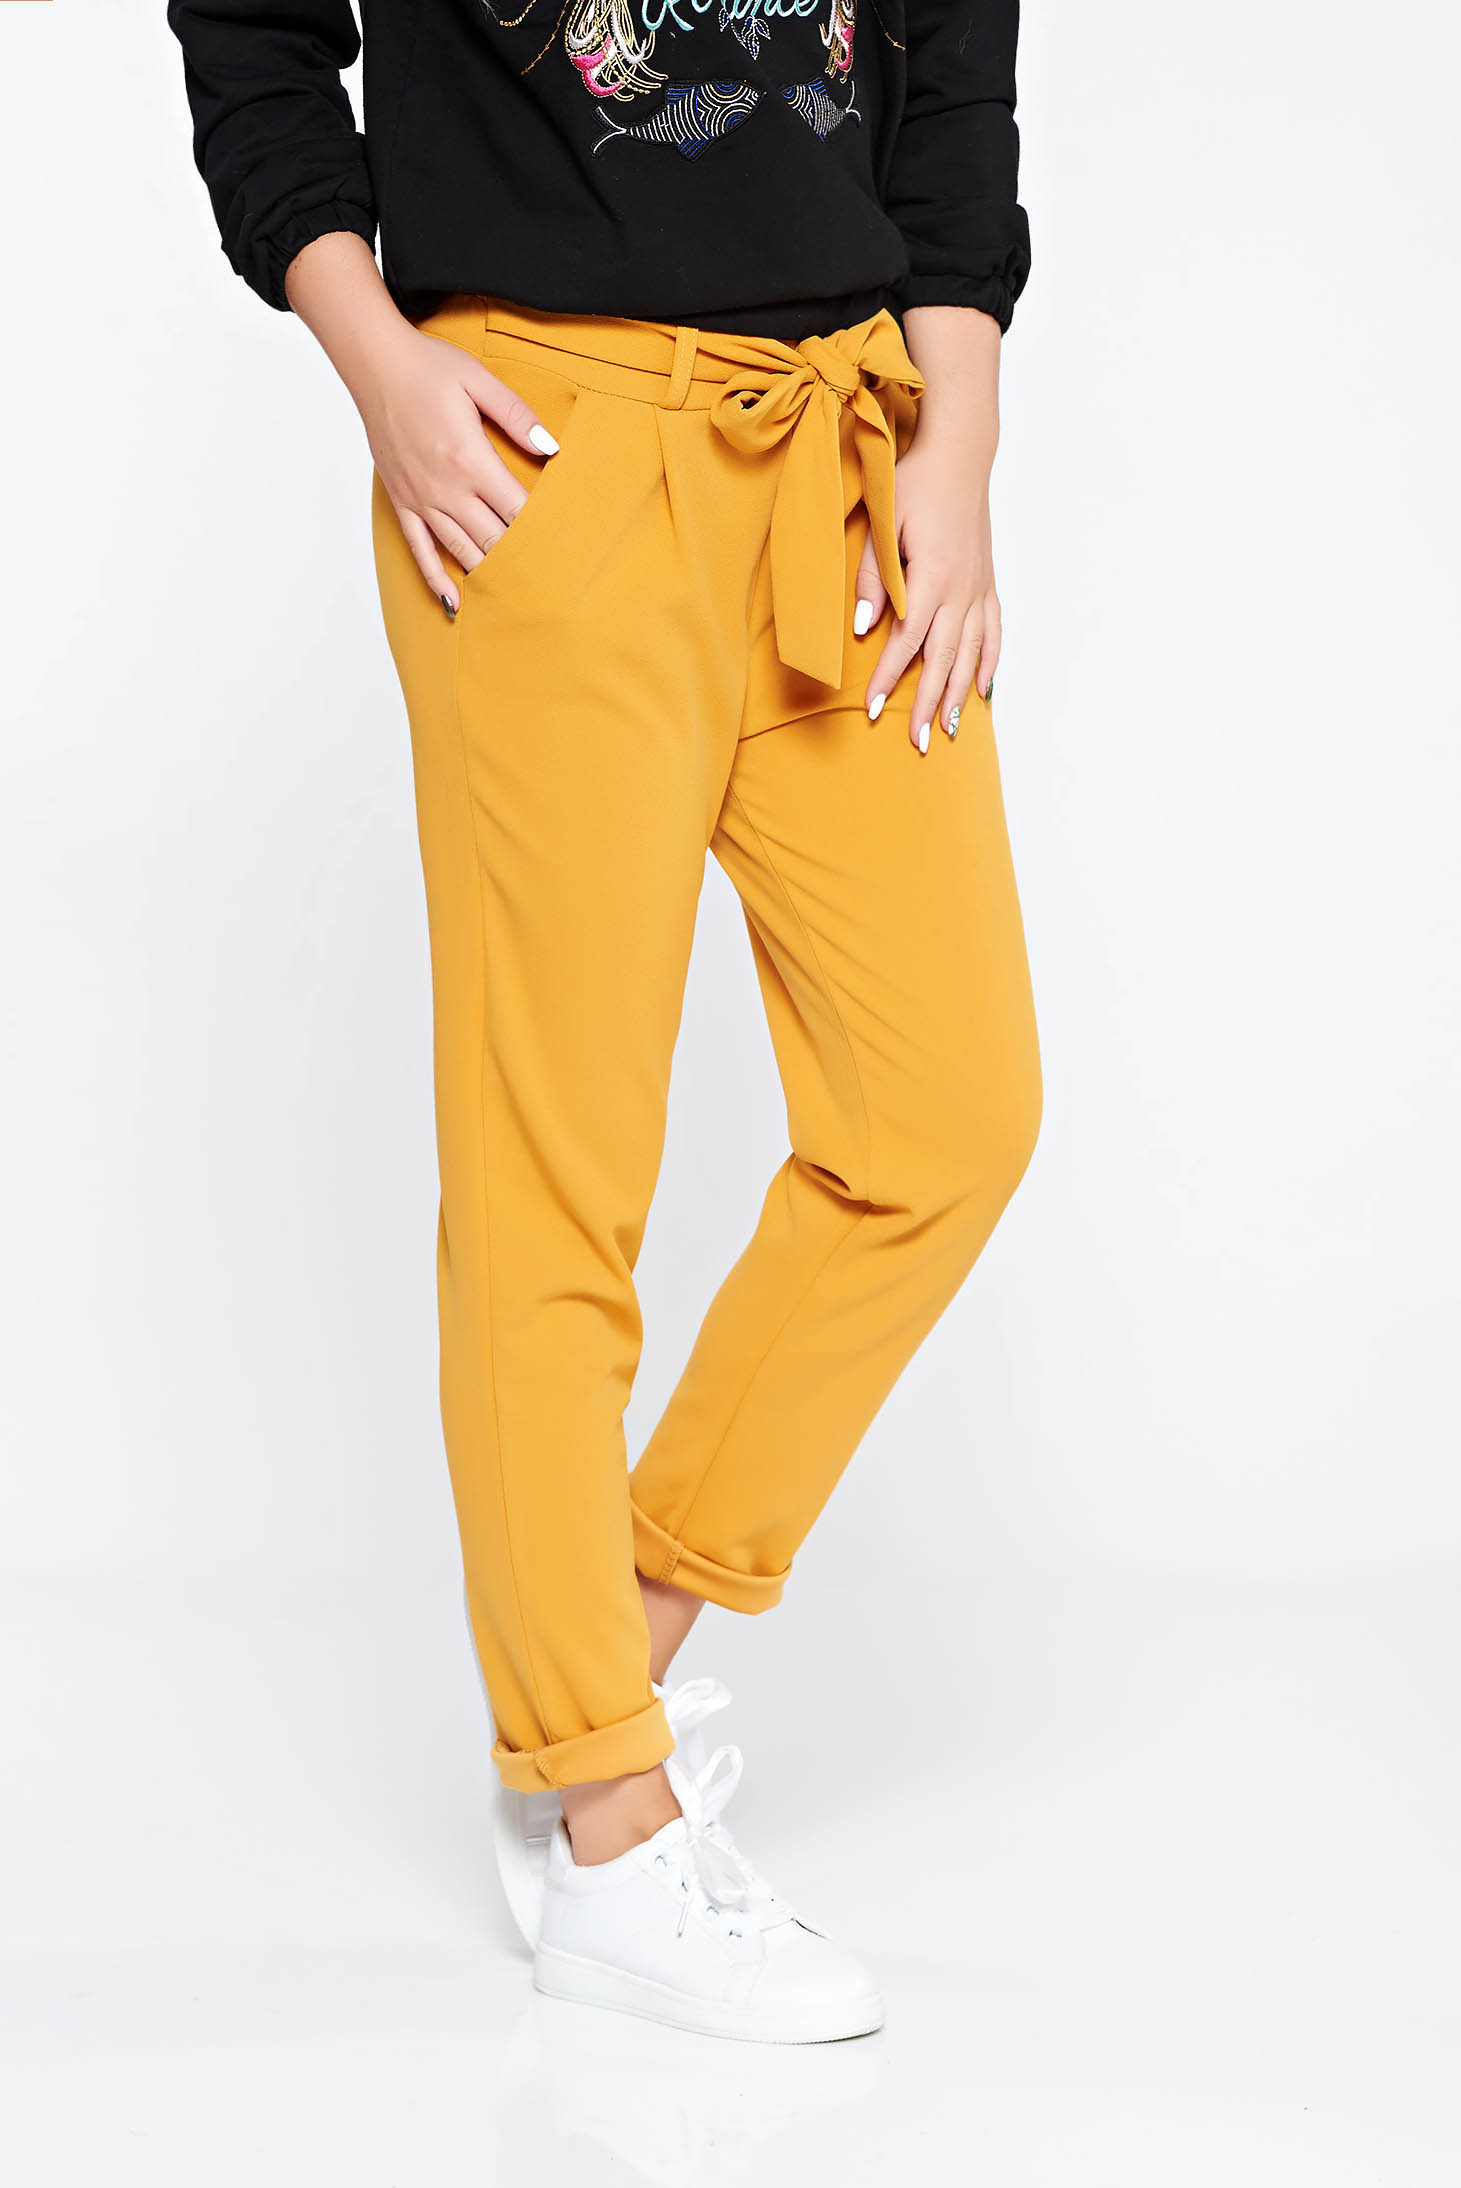 Pantaloni SunShine mustarii casual cu talie inalta din material usor elastic cu buzunare